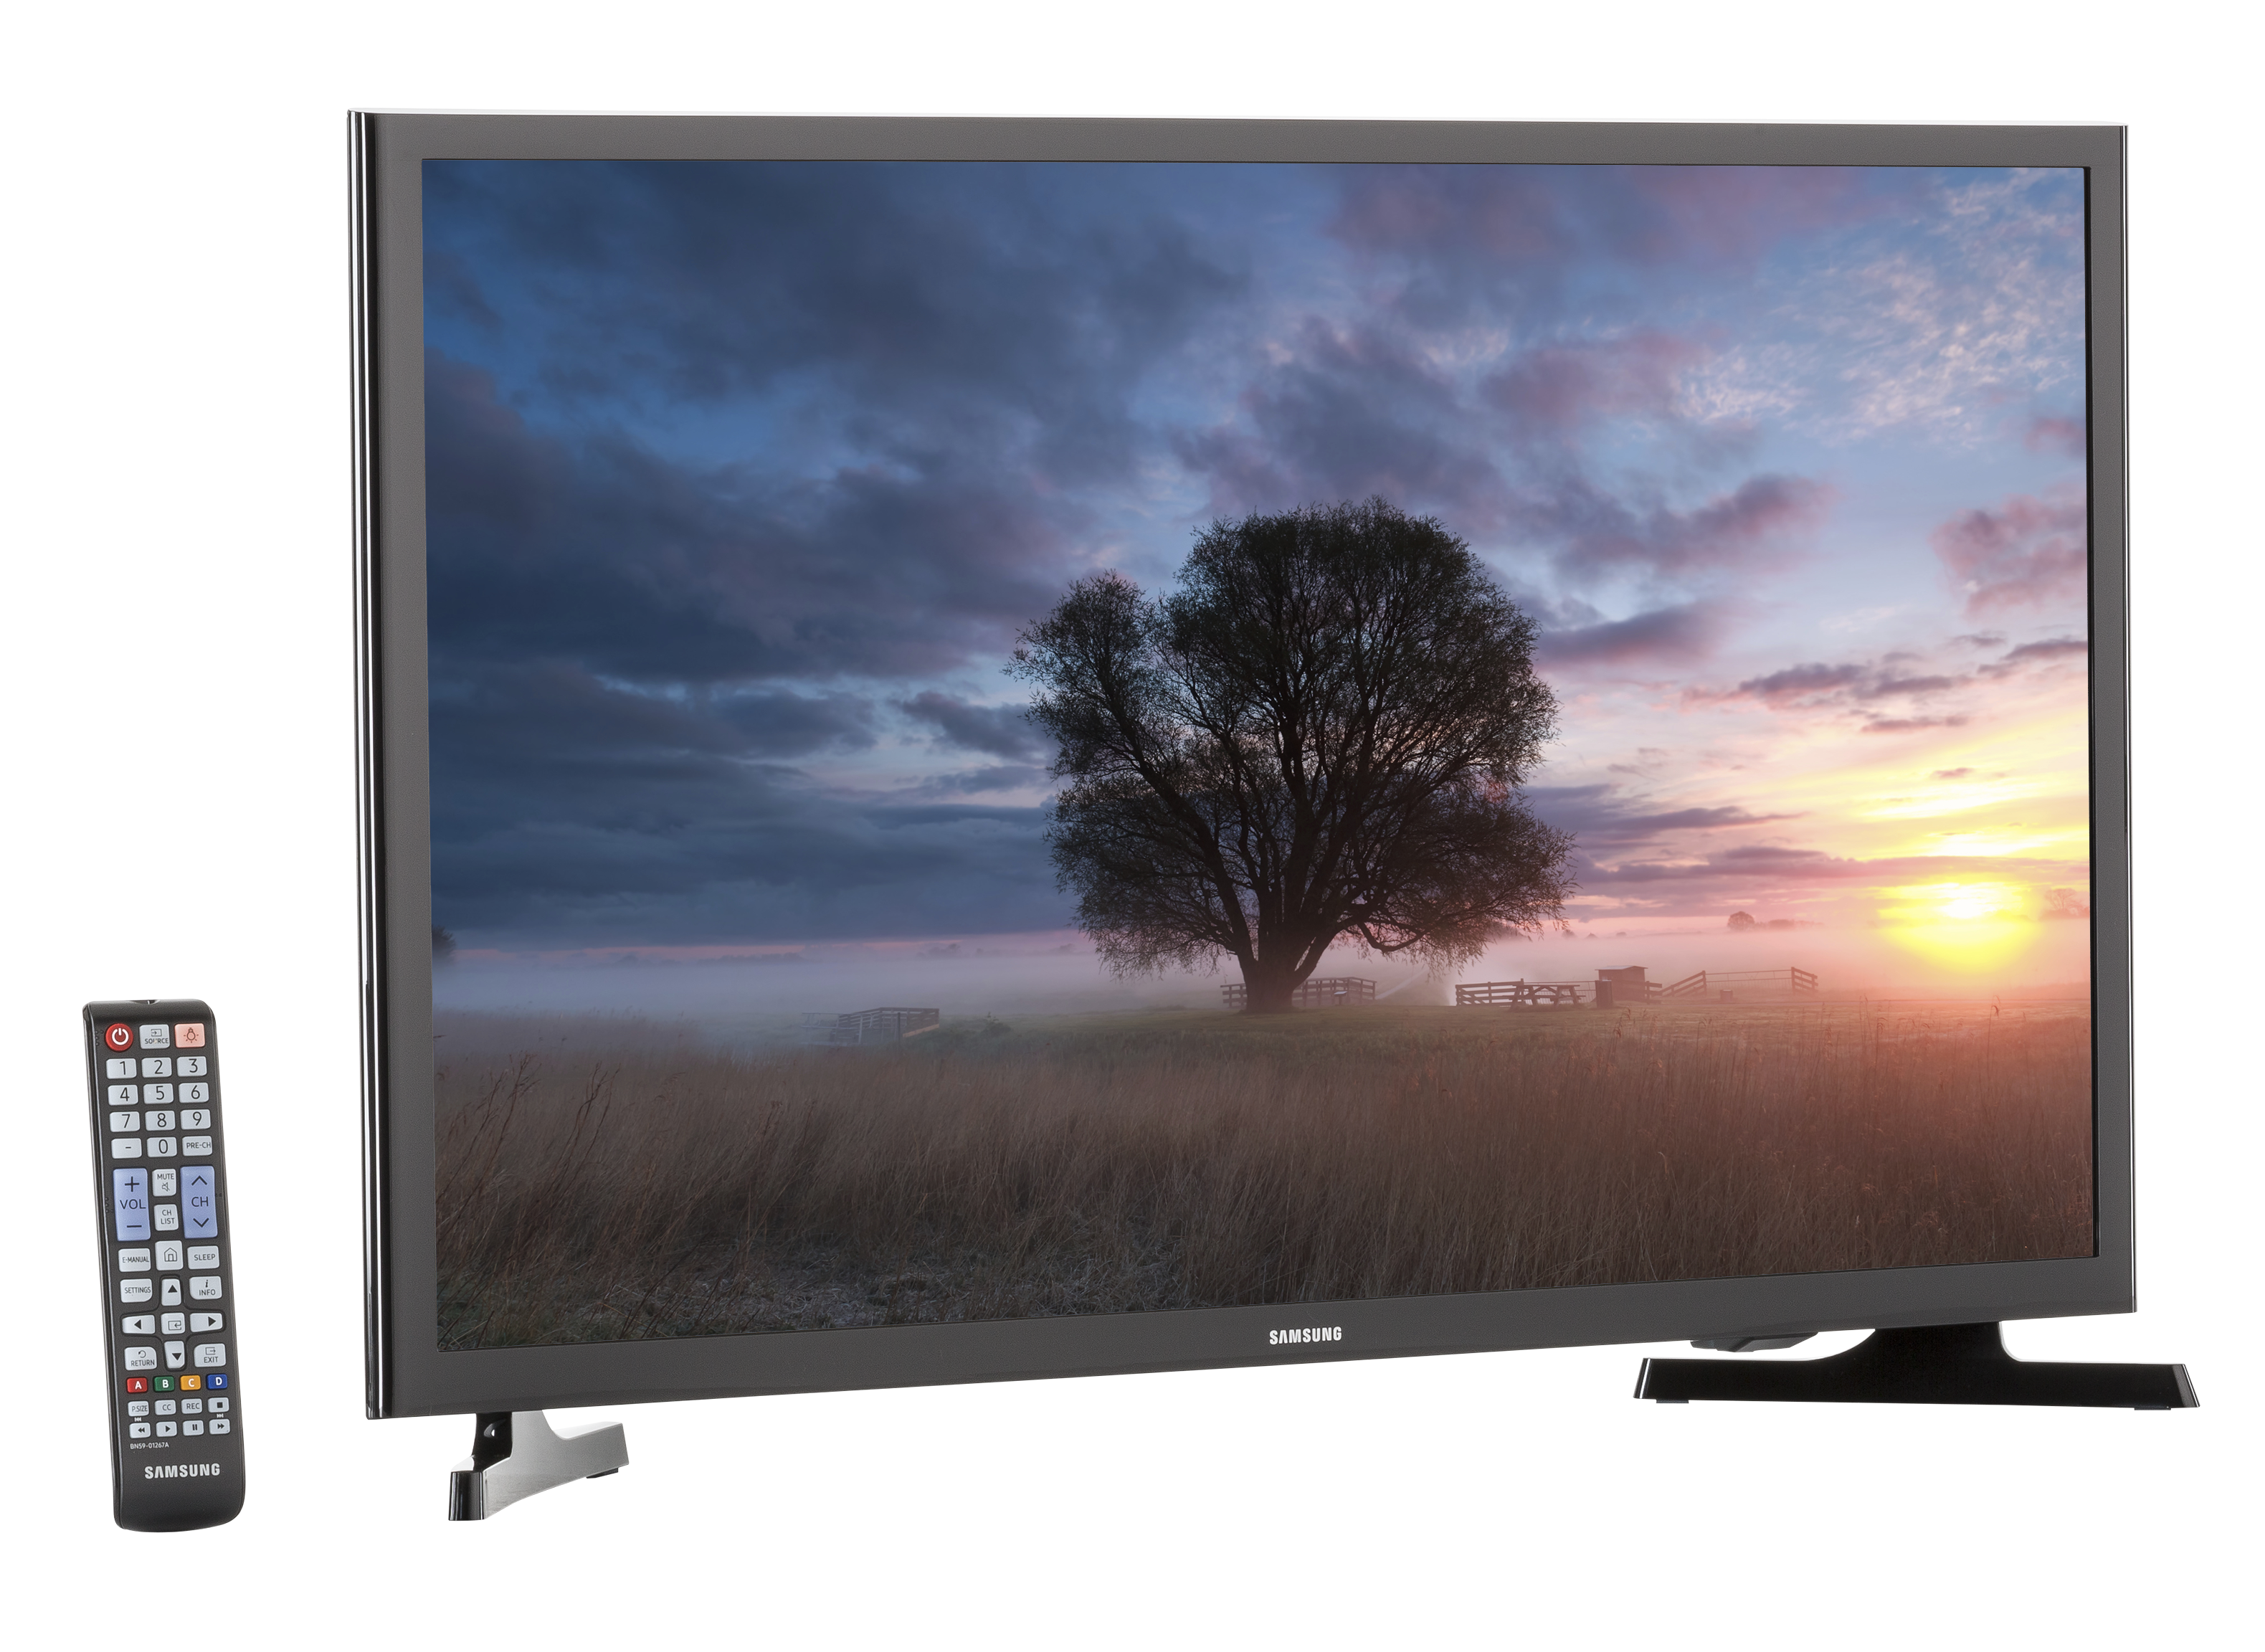 Samsung UN32M4500 TV Review - Consumer Reports